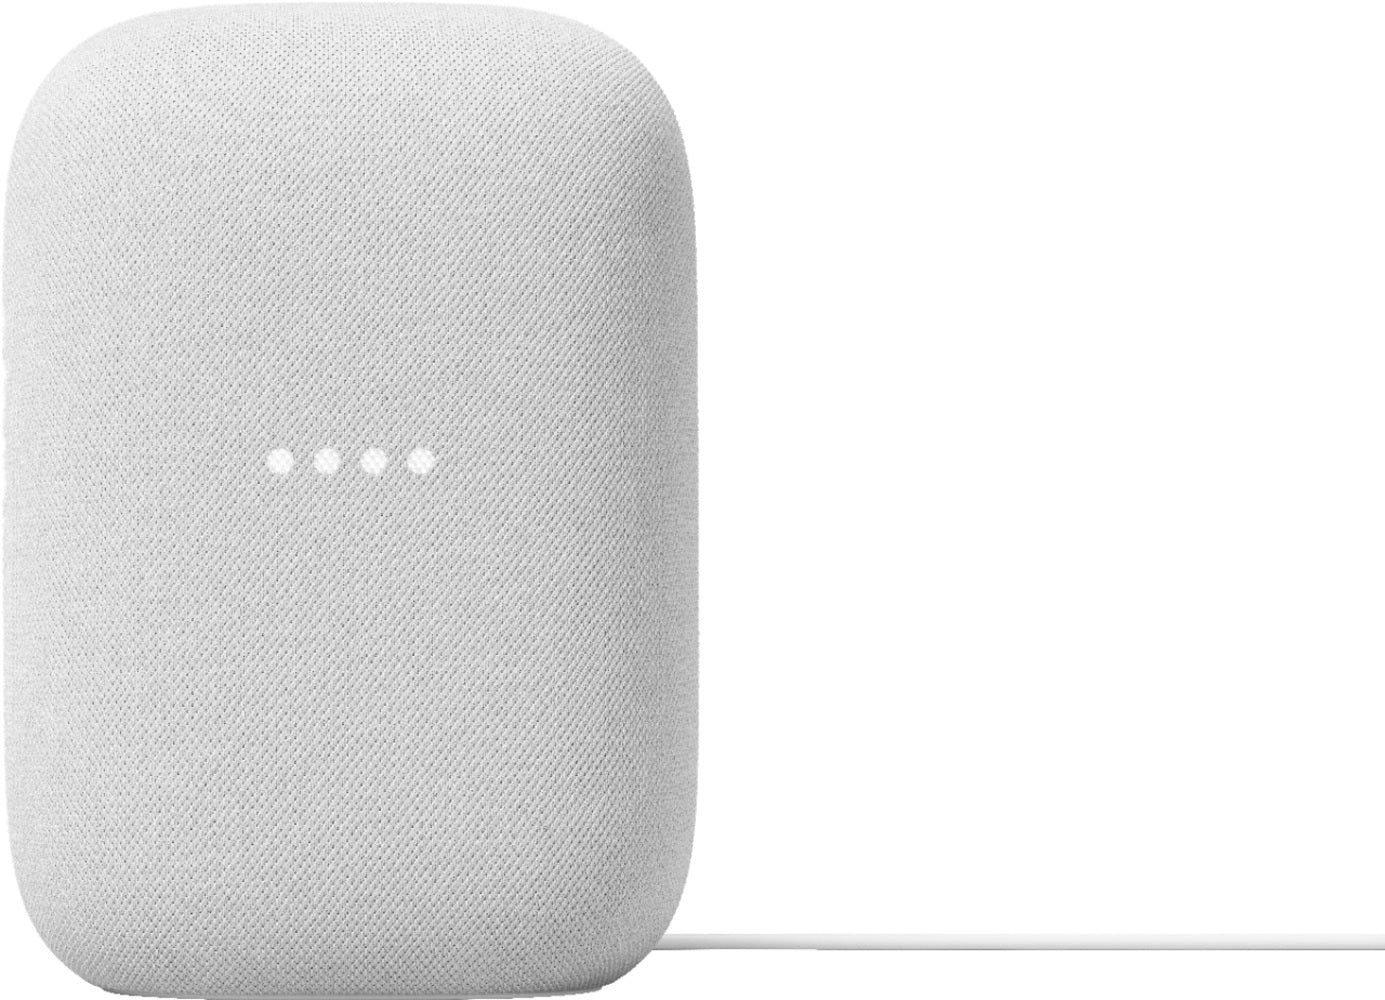 Google Nest Audio Smart Speaker with Google Assistant - Chalk (New)